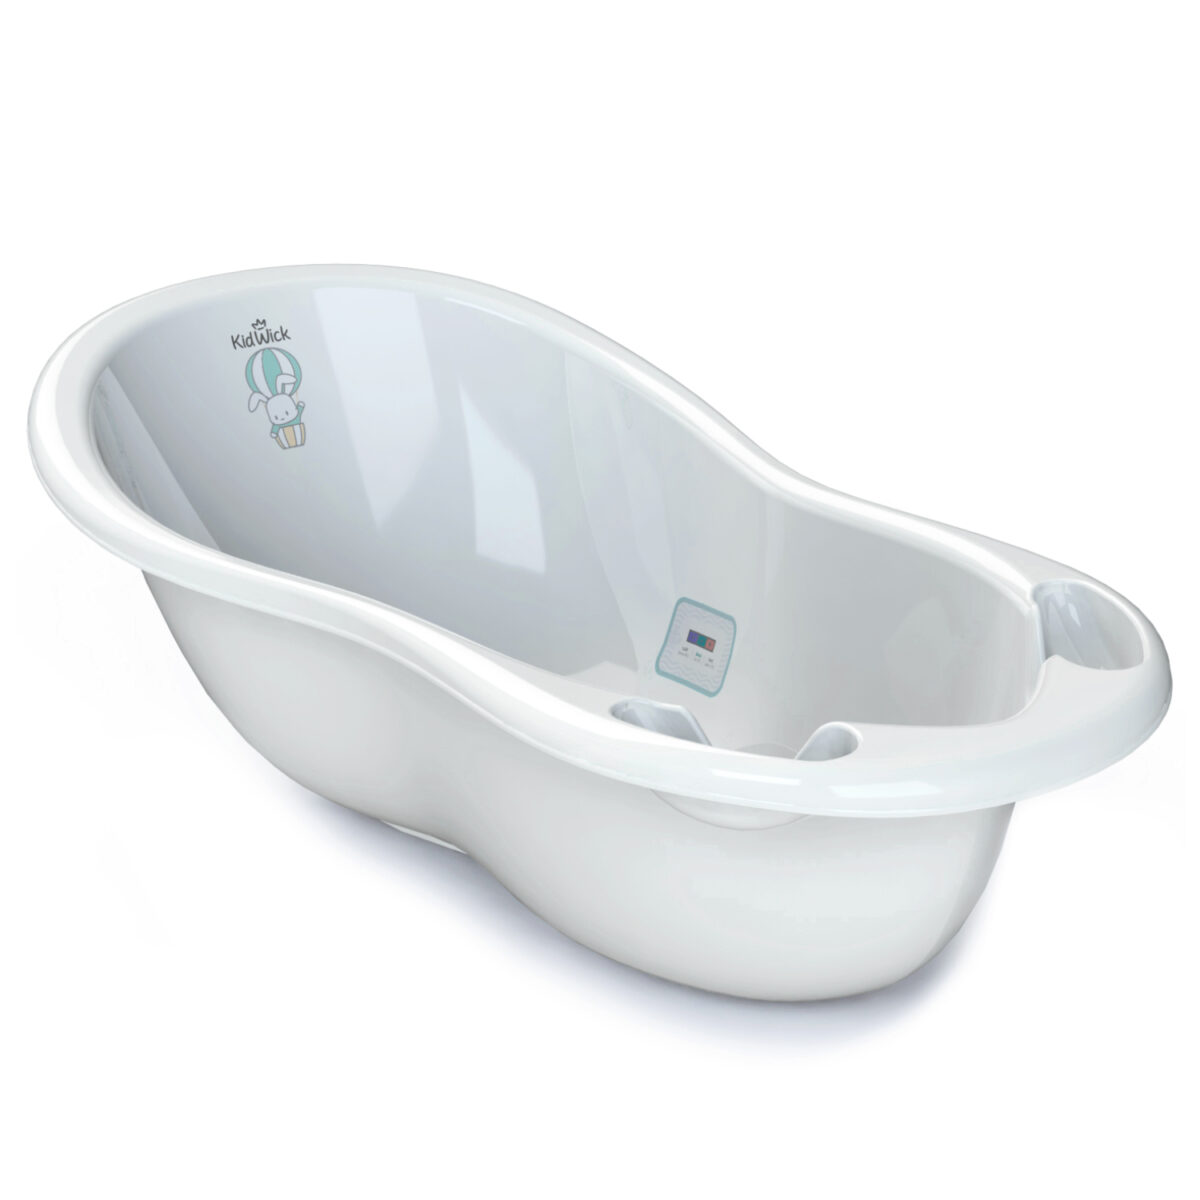 Ванночка для купания "Kidwick МП Шатл с термометром", цвет - белый/бирюзовый 1